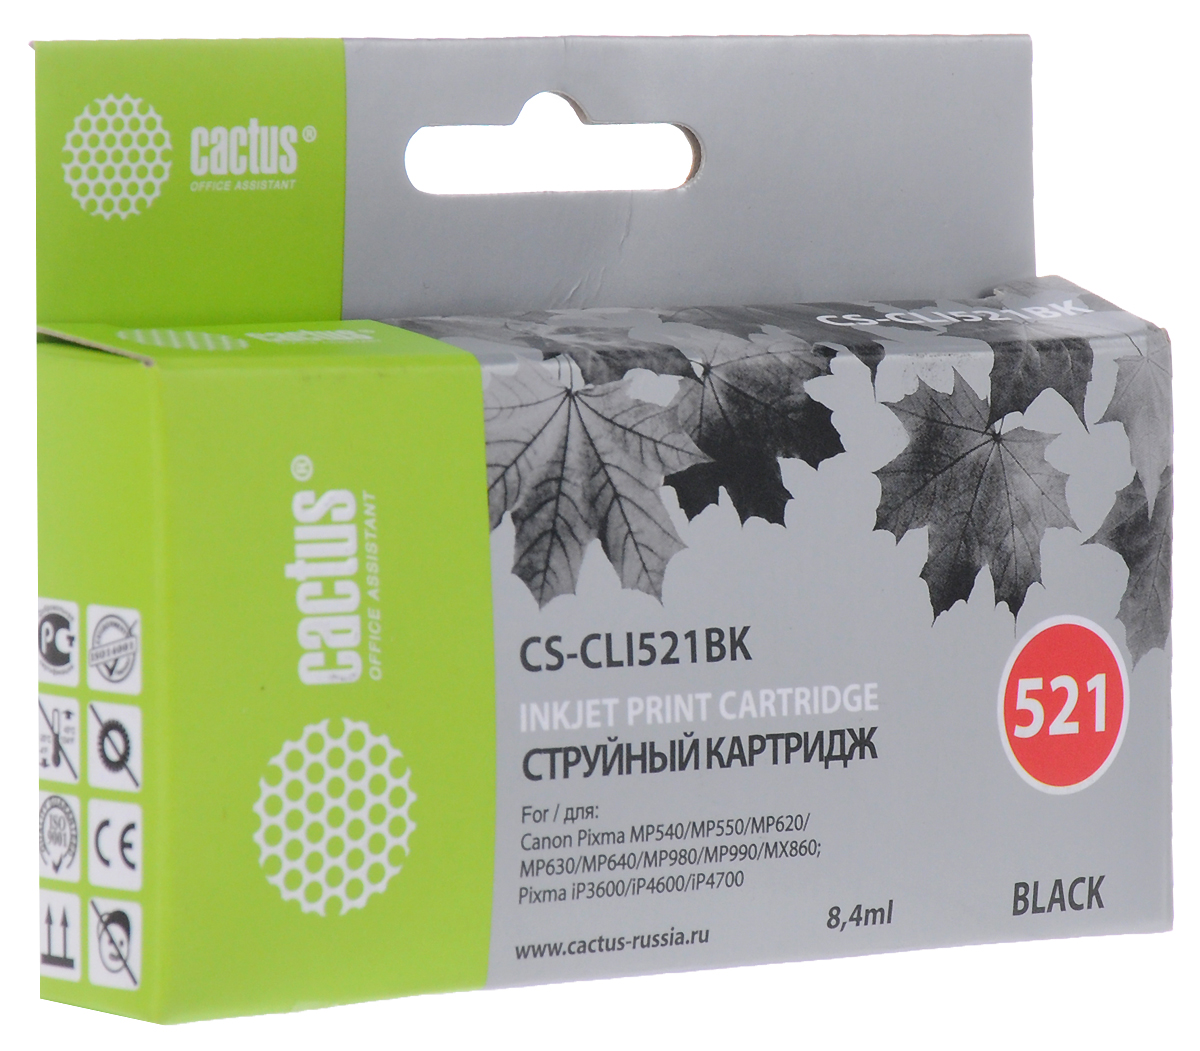 Cactus CS-CLI521BK, Black картридж струйный для Canon Pixma MP540/MP550/MP620/MP630/MP640/MP660/MP980/MP990/iP3600/iP4600/iP4700/MX860